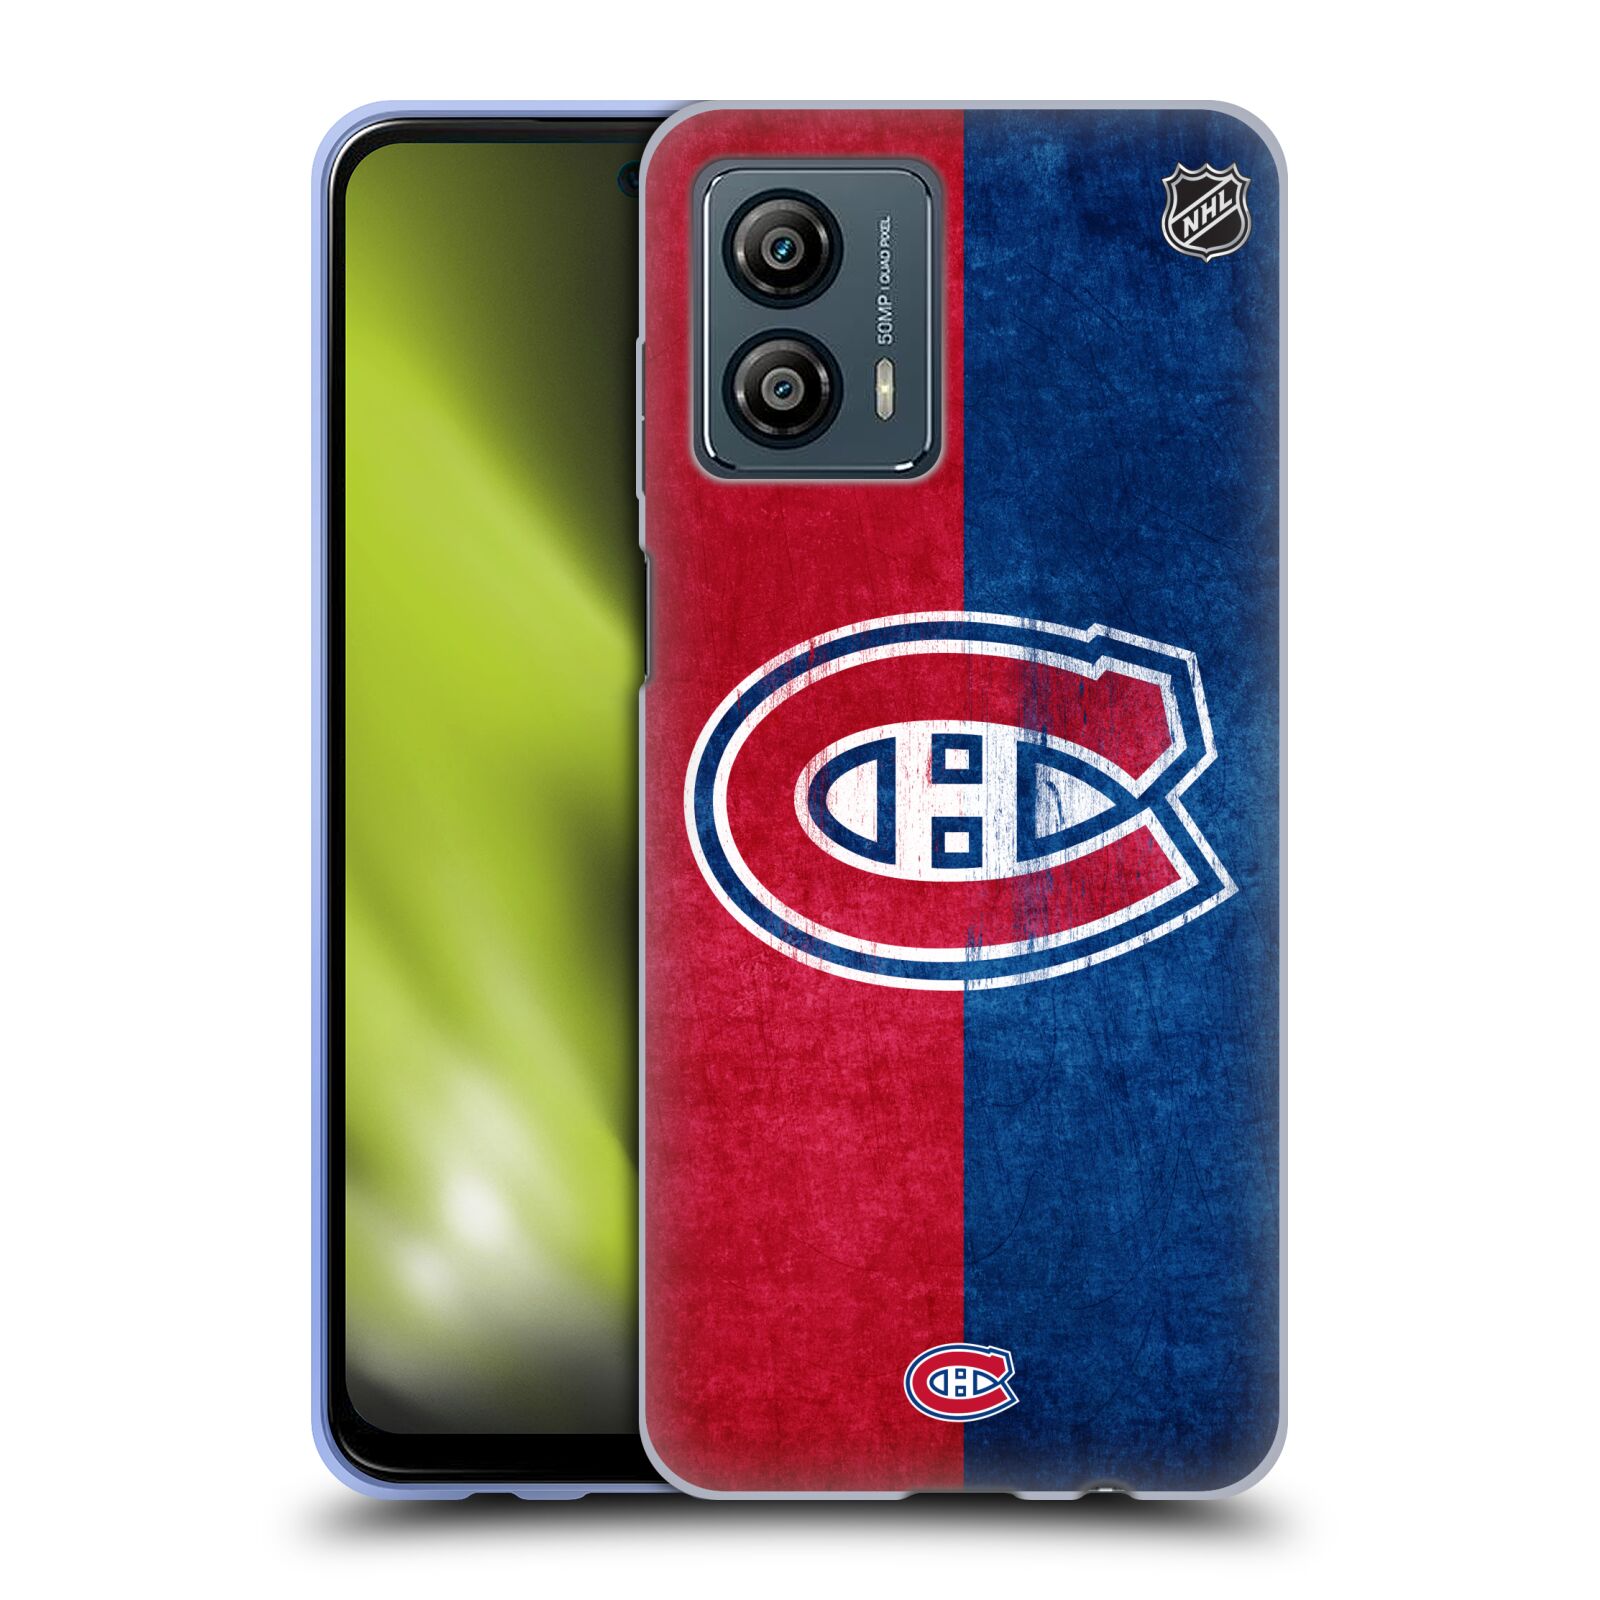 Silikonové pouzdro na mobil Motorola Moto G53 5G - NHL - Půlené logo Montreal Canadiens (Silikonový kryt, obal, pouzdro na mobilní telefon Motorola Moto G53 5G s licencovaným motivem NHL - Půlené logo Montreal Canadiens)